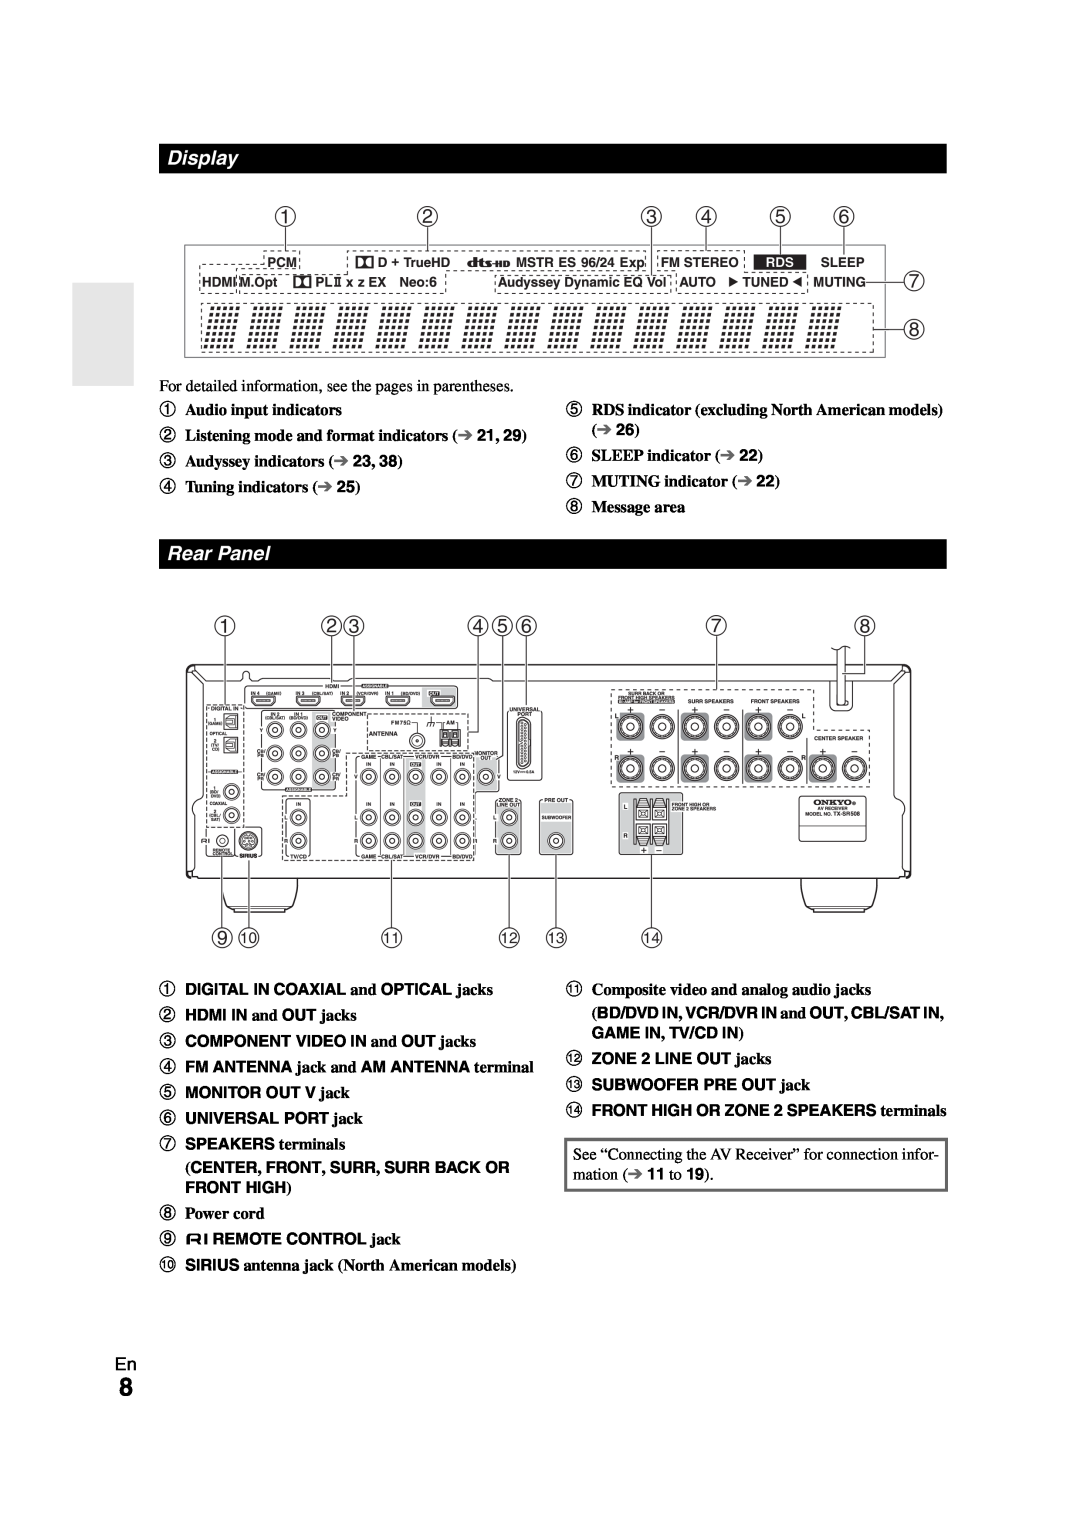 Onkyo TX-SR508 instruction manual 